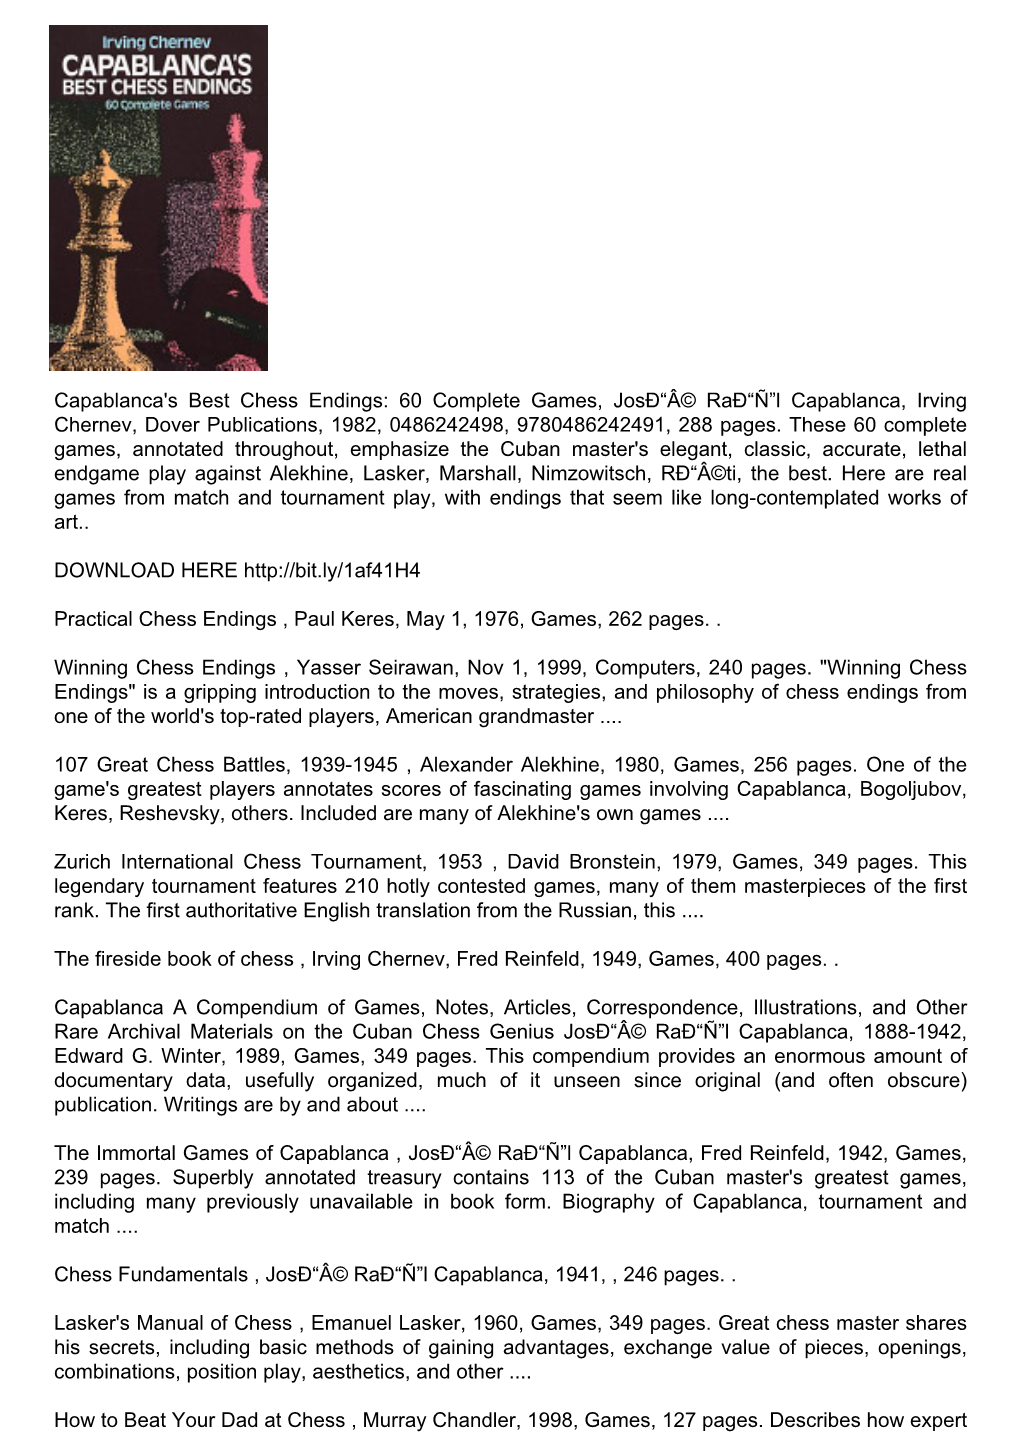 Capablanca's Best Chess Endings: 60 Complete Games, Josð“Â© Rað“Ñ”L Capablanca, Irving Chernev, Dover Publications, 1982, 0486242498, 9780486242491, 288 Pages